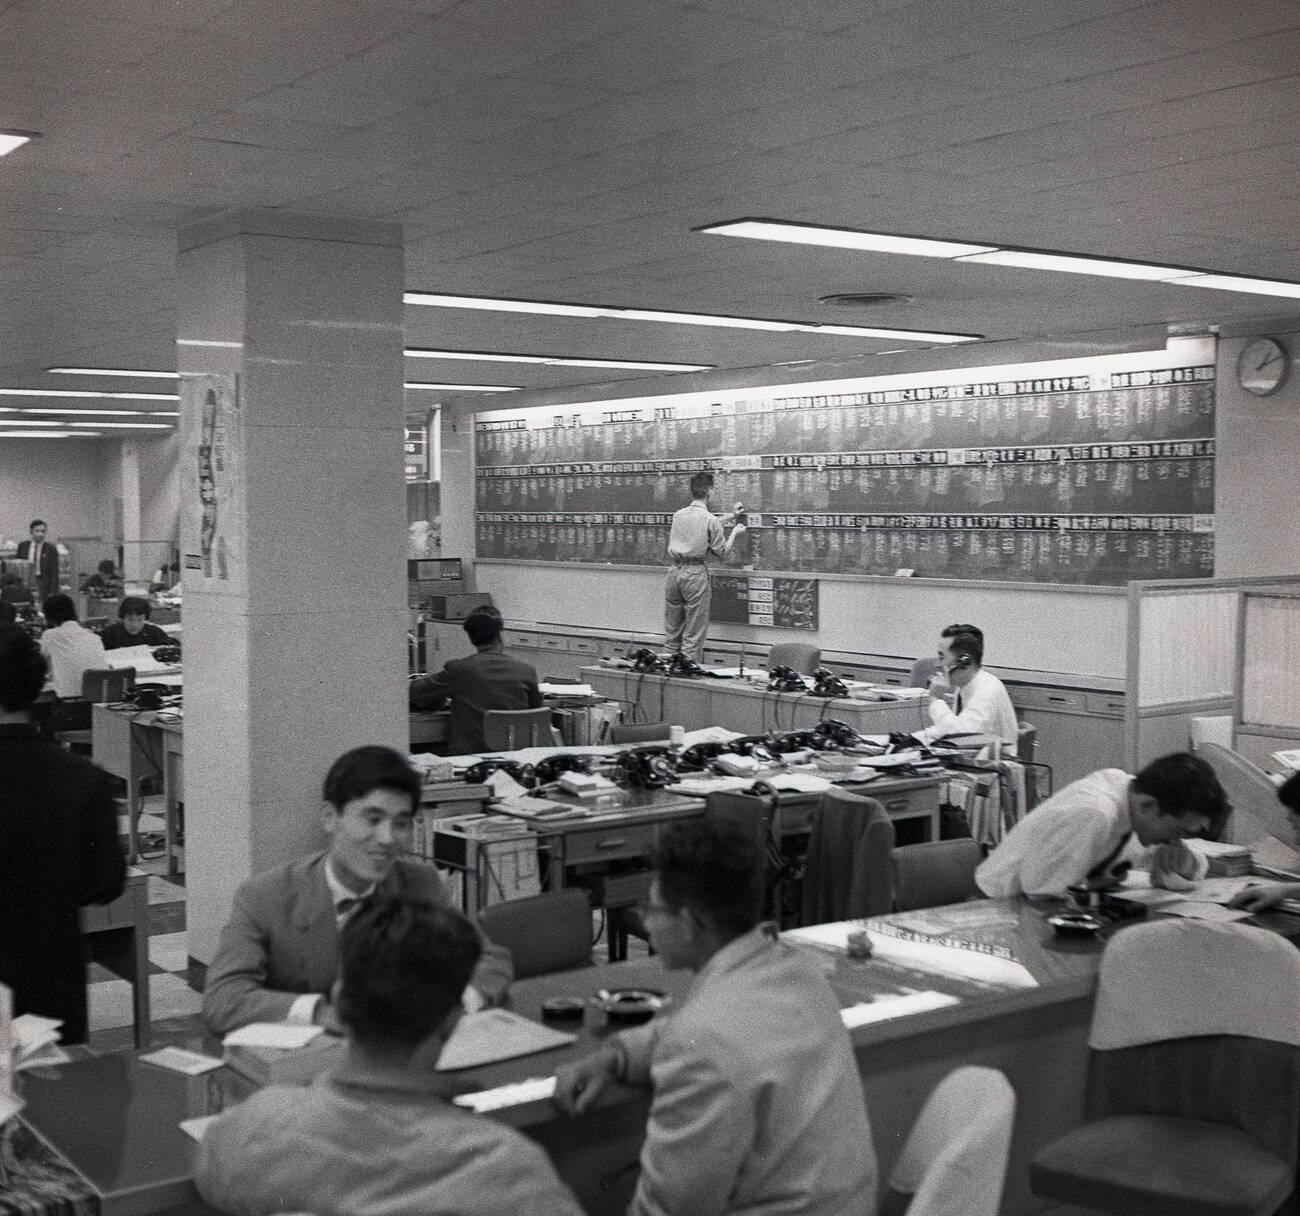 Staff working in a financial office in Tokyo, 1950s.